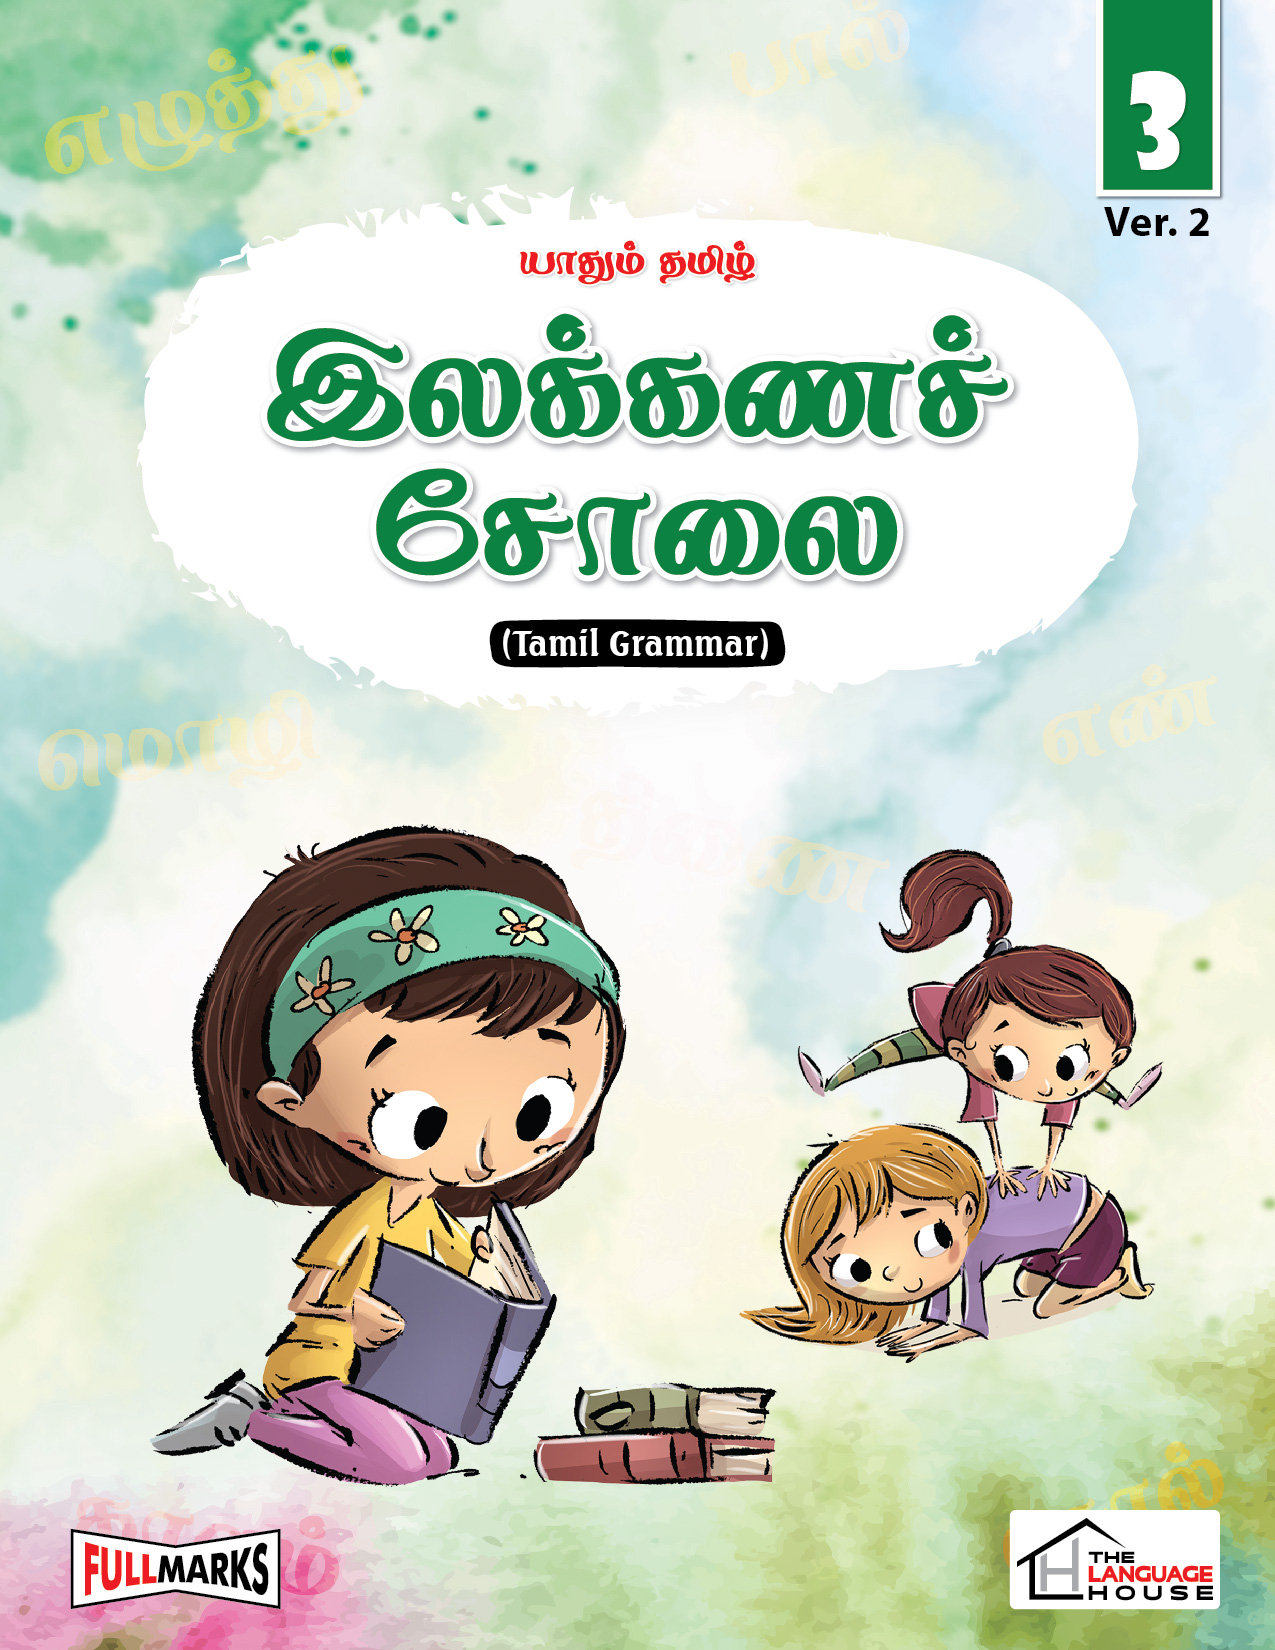 Tamil Grammar Ver. 2 Class 3